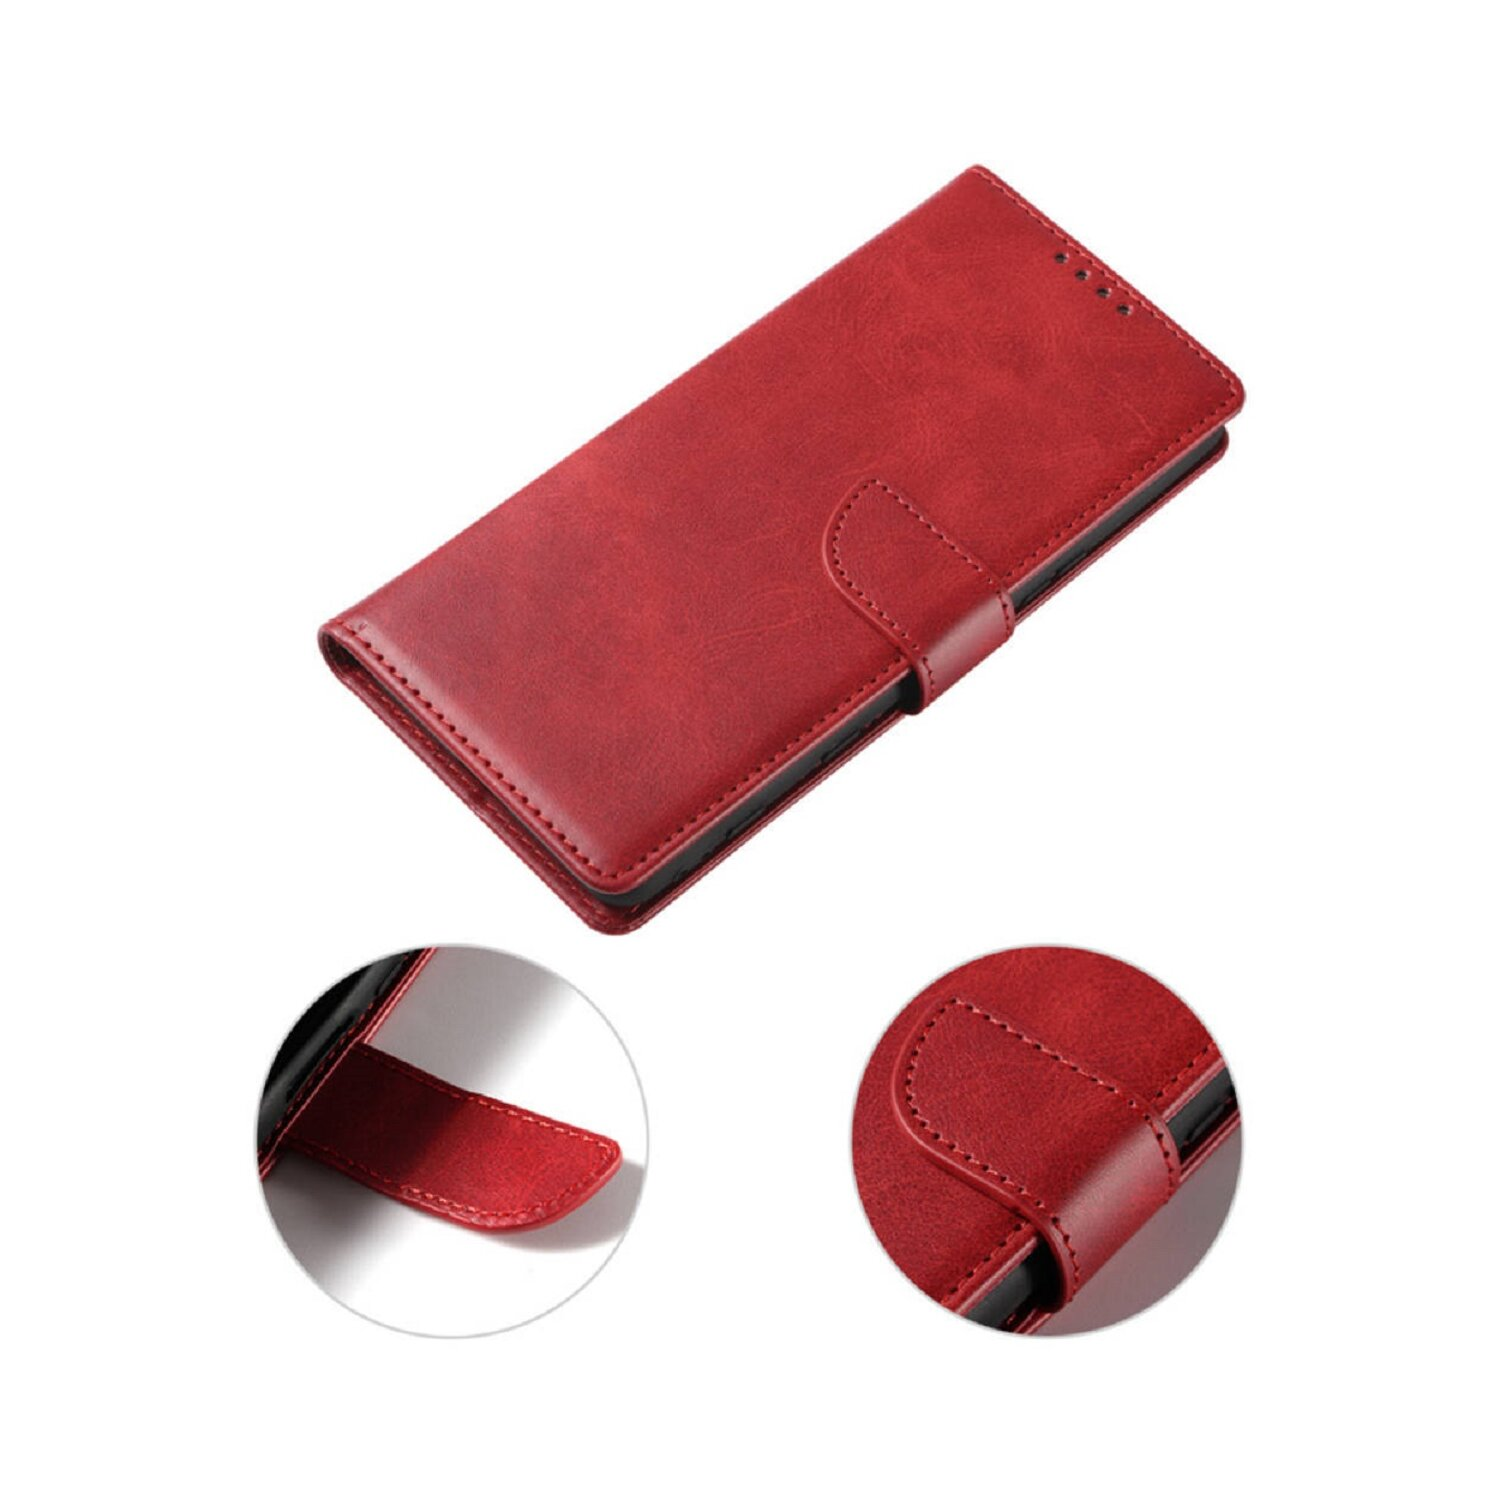 COFI Wallet Magnet Case Buch Tasche, Rot Bookcover, Oppo, A78